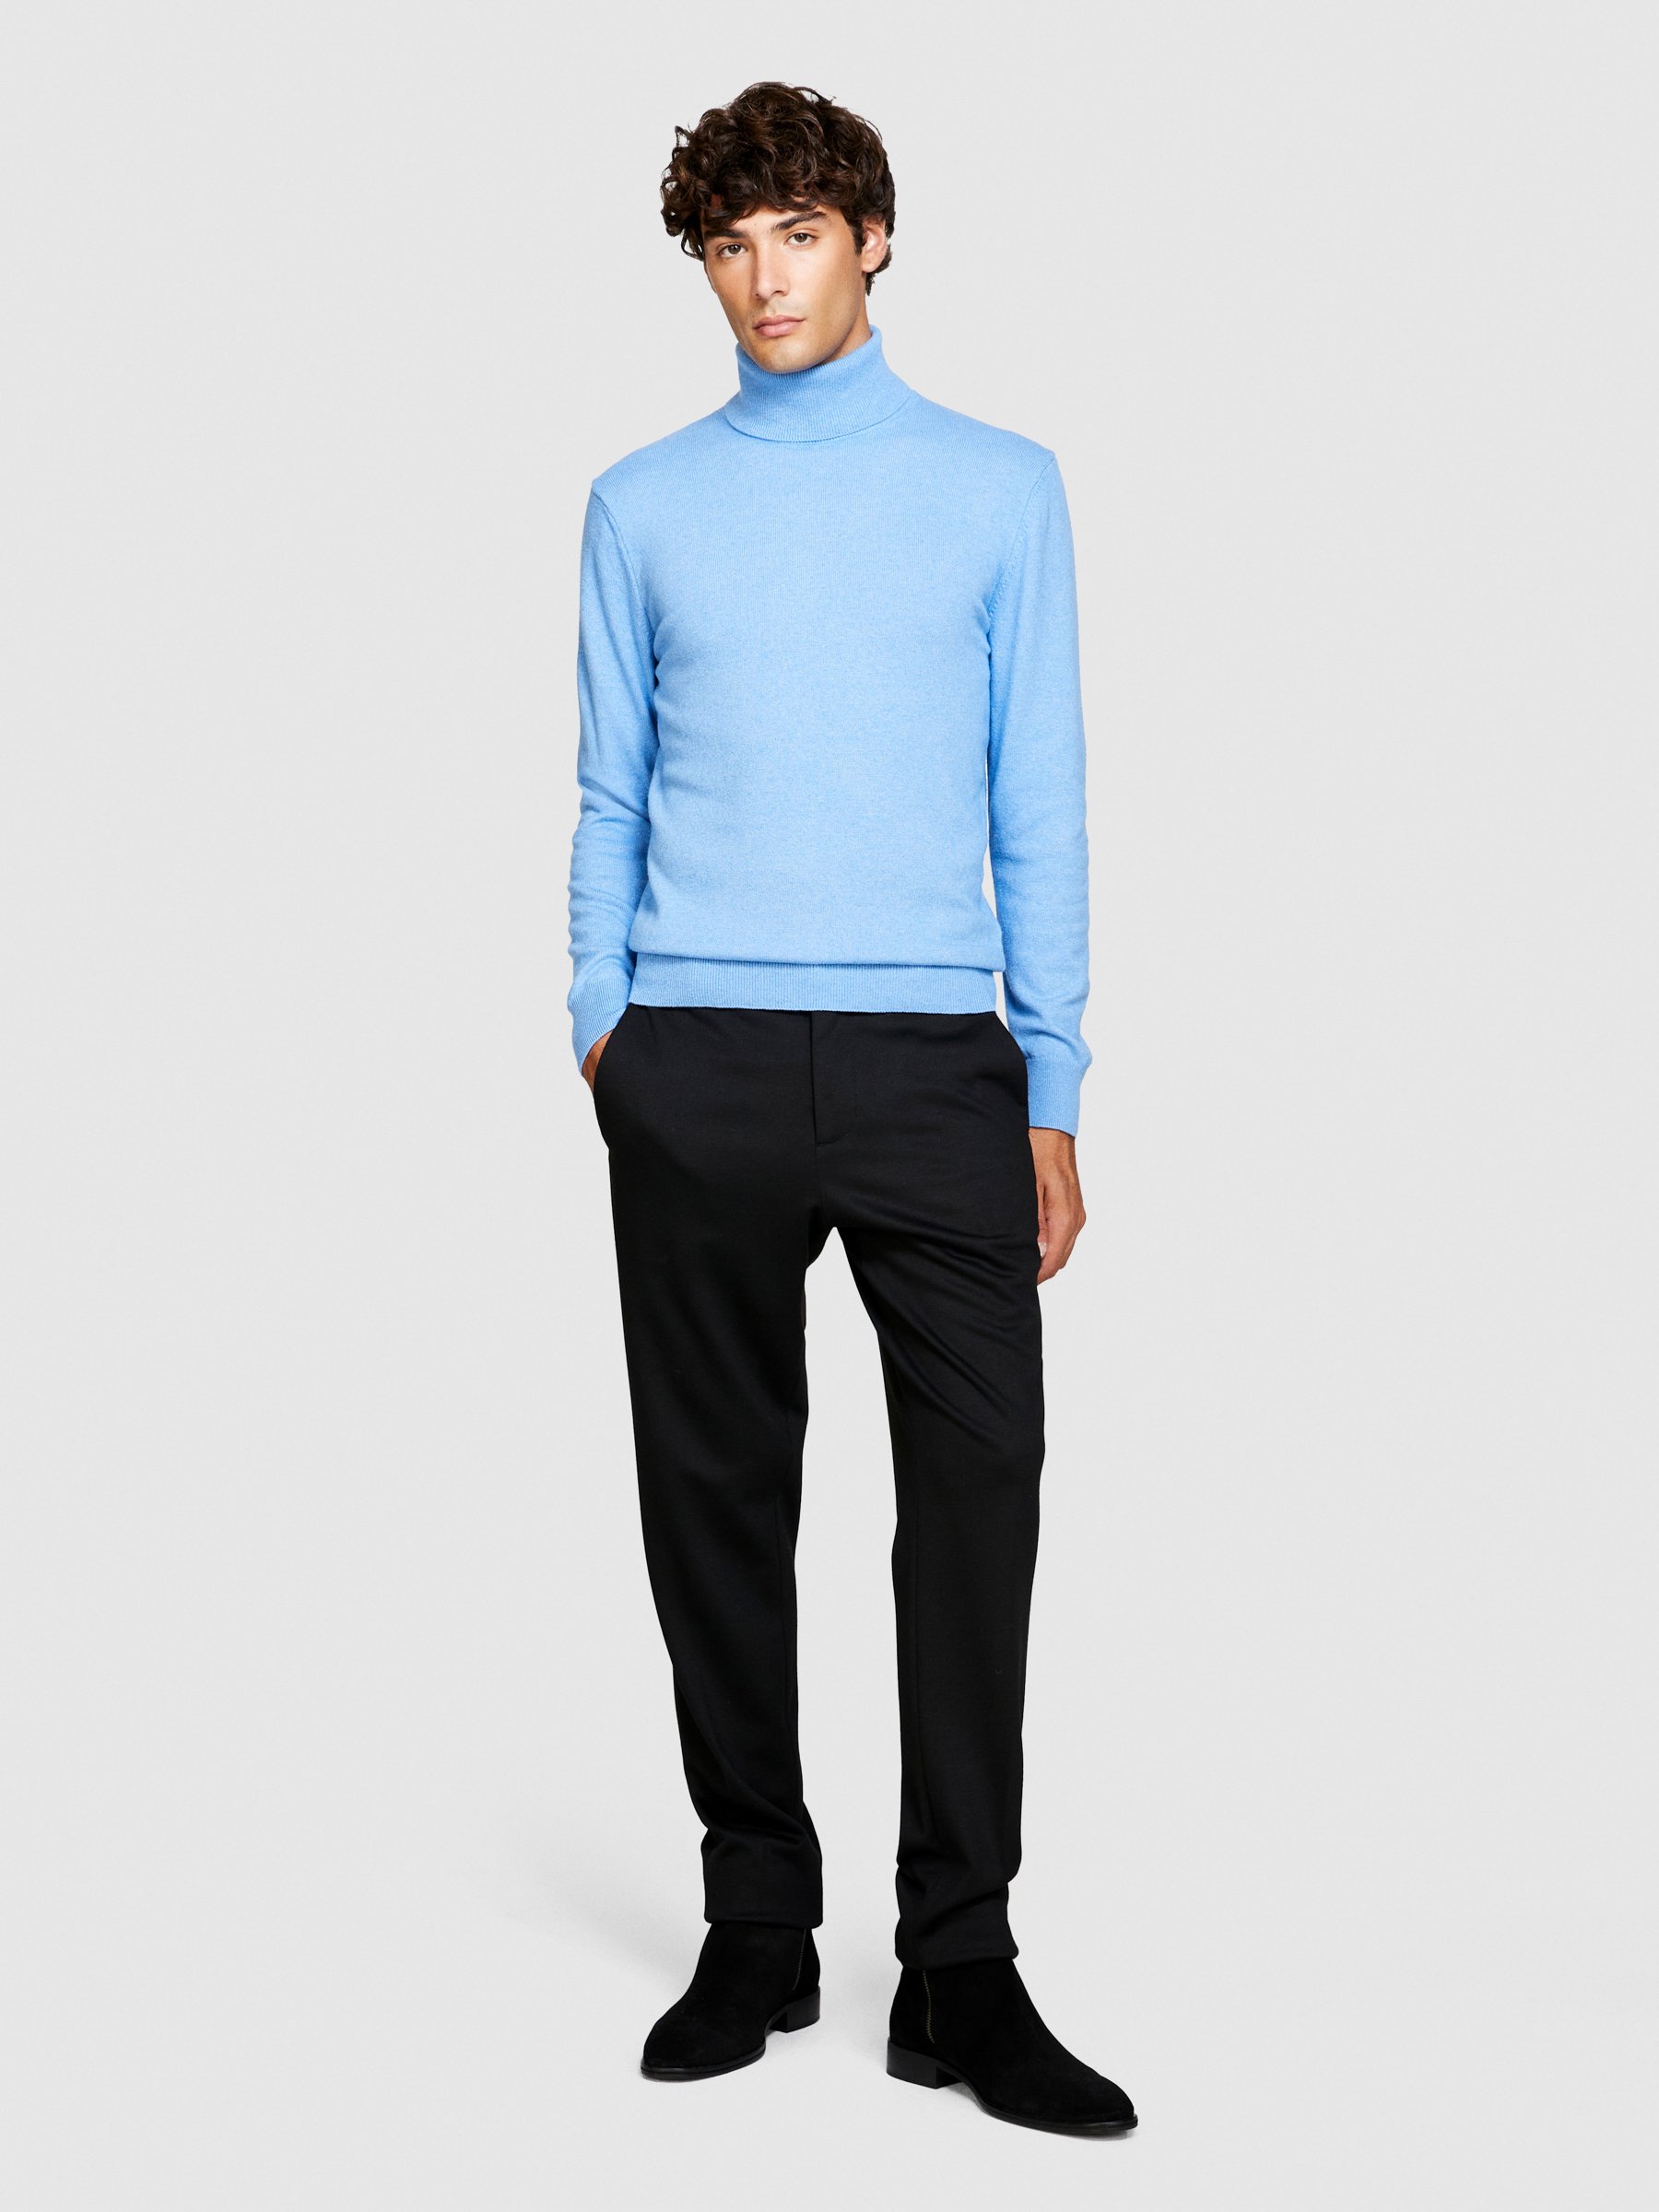 Sisley - High Neck Sweater, Man, Sky Blue, Size: M